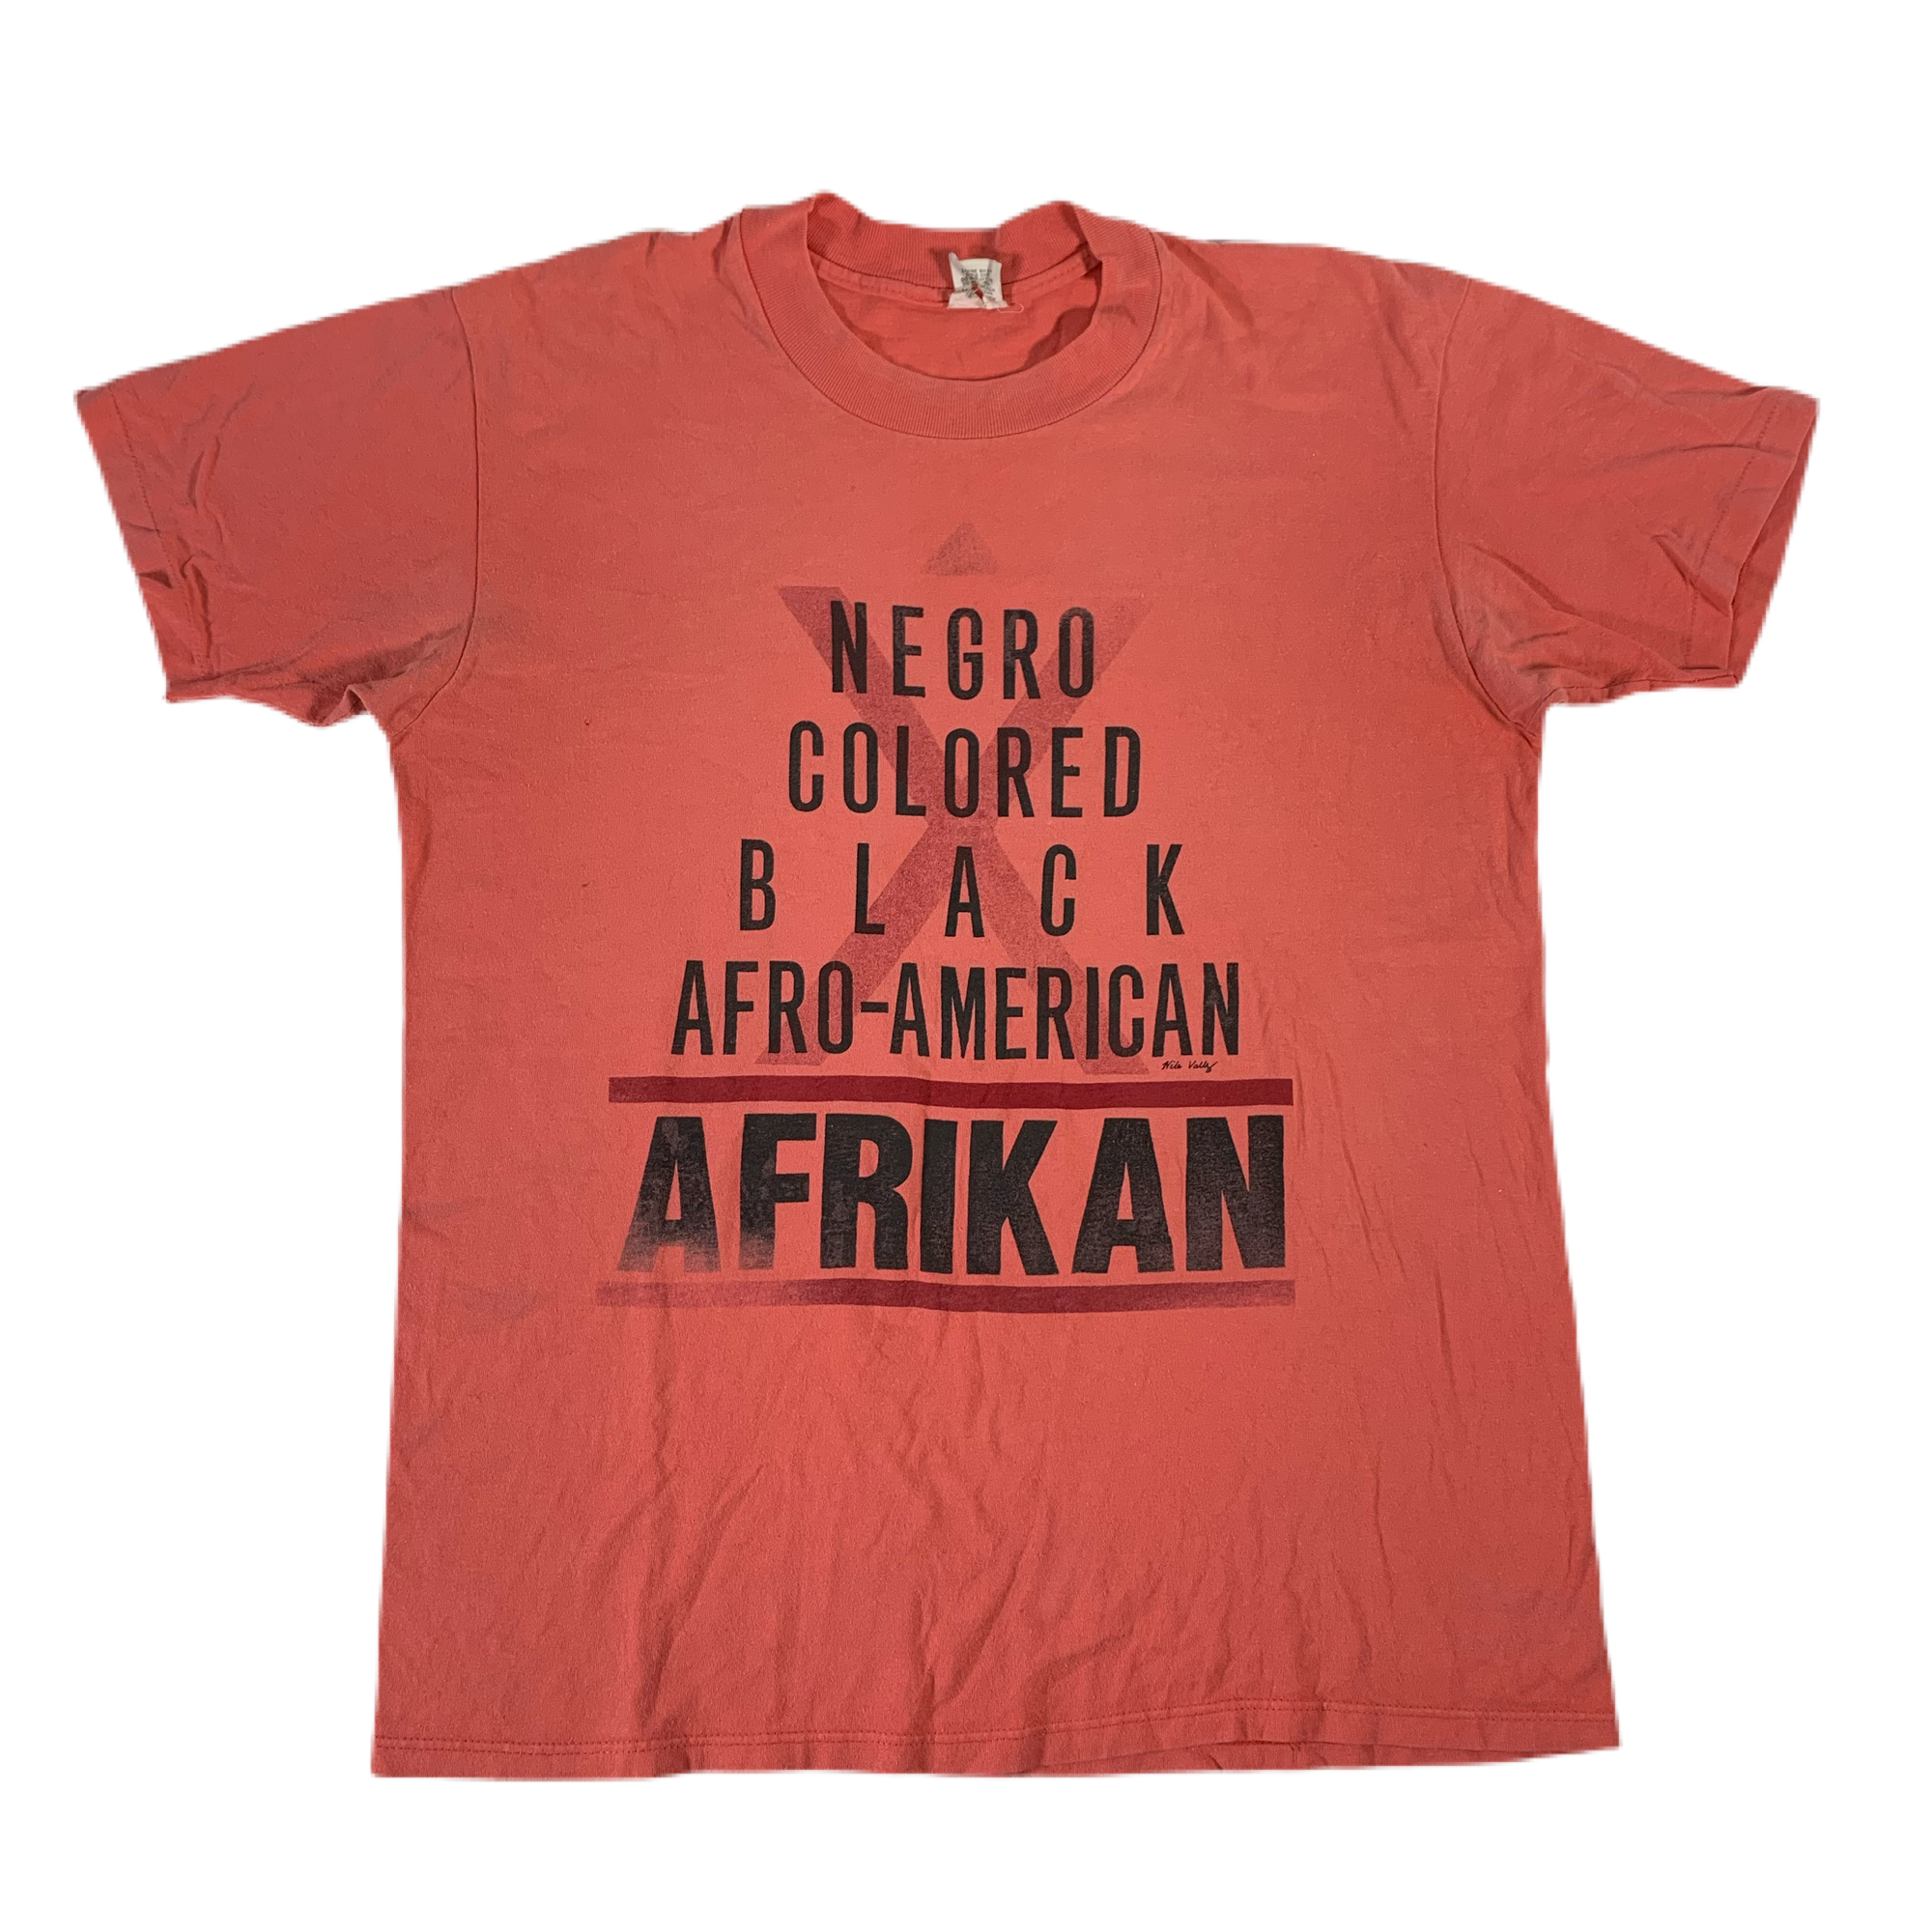 Vintage Malcolm X "Afrikan" T-Shirt - jointcustodydc